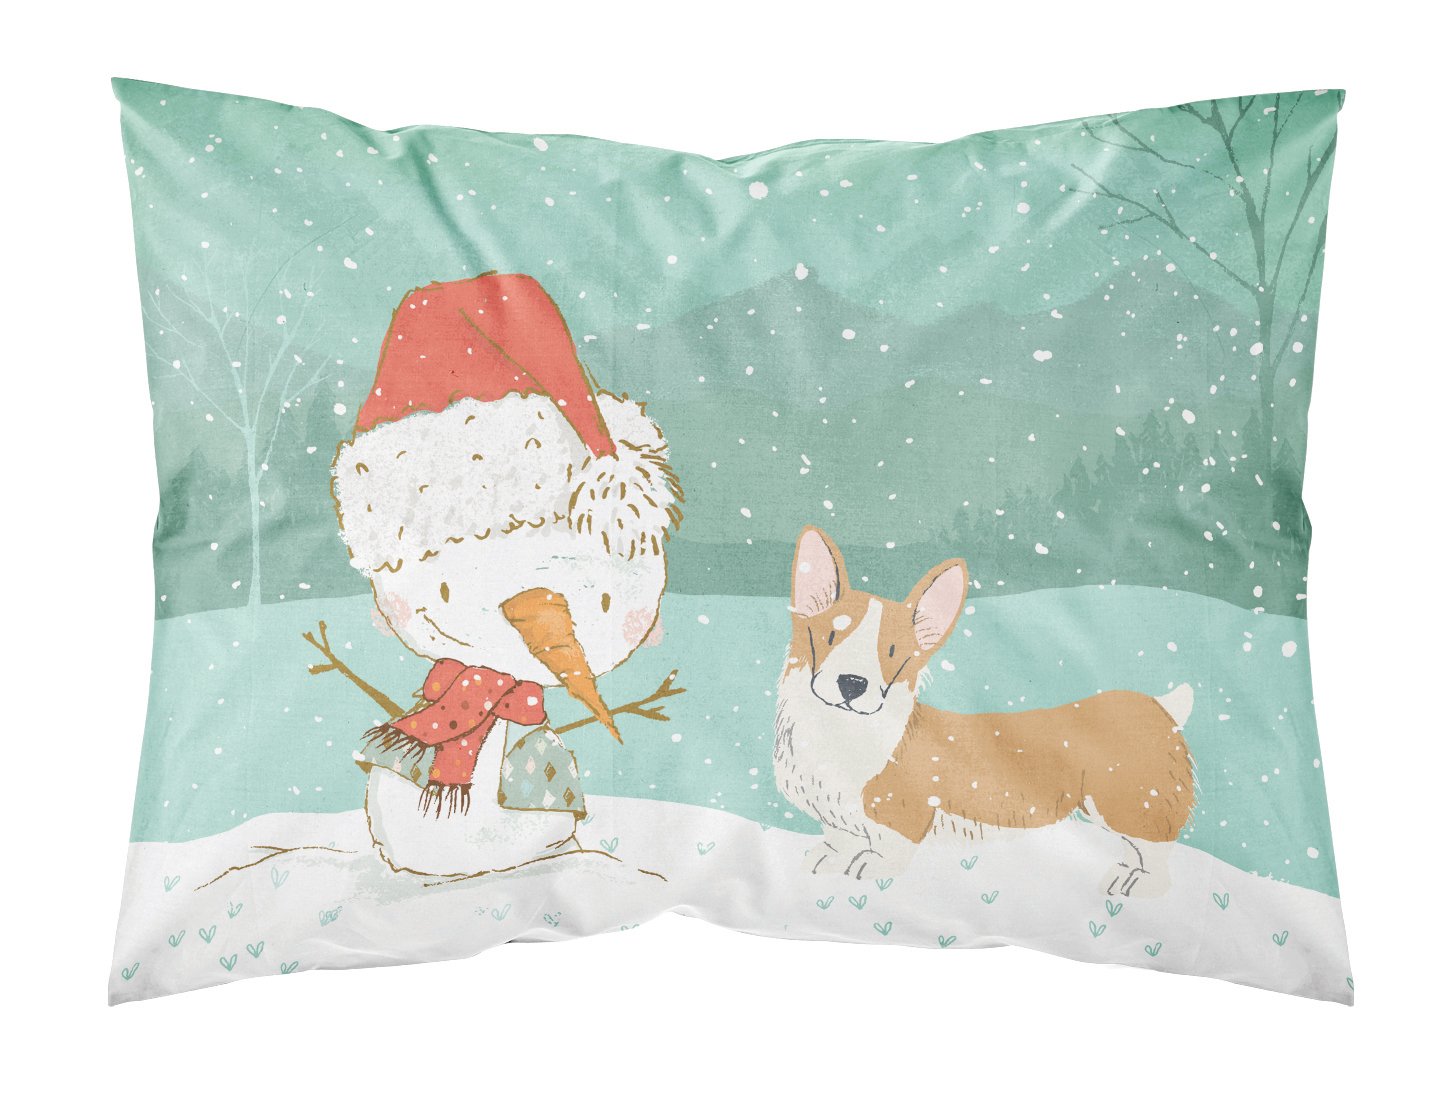 Pembroke Corgi Snowman Christmas Fabric Standard Pillowcase CK2060PILLOWCASE by Caroline's Treasures